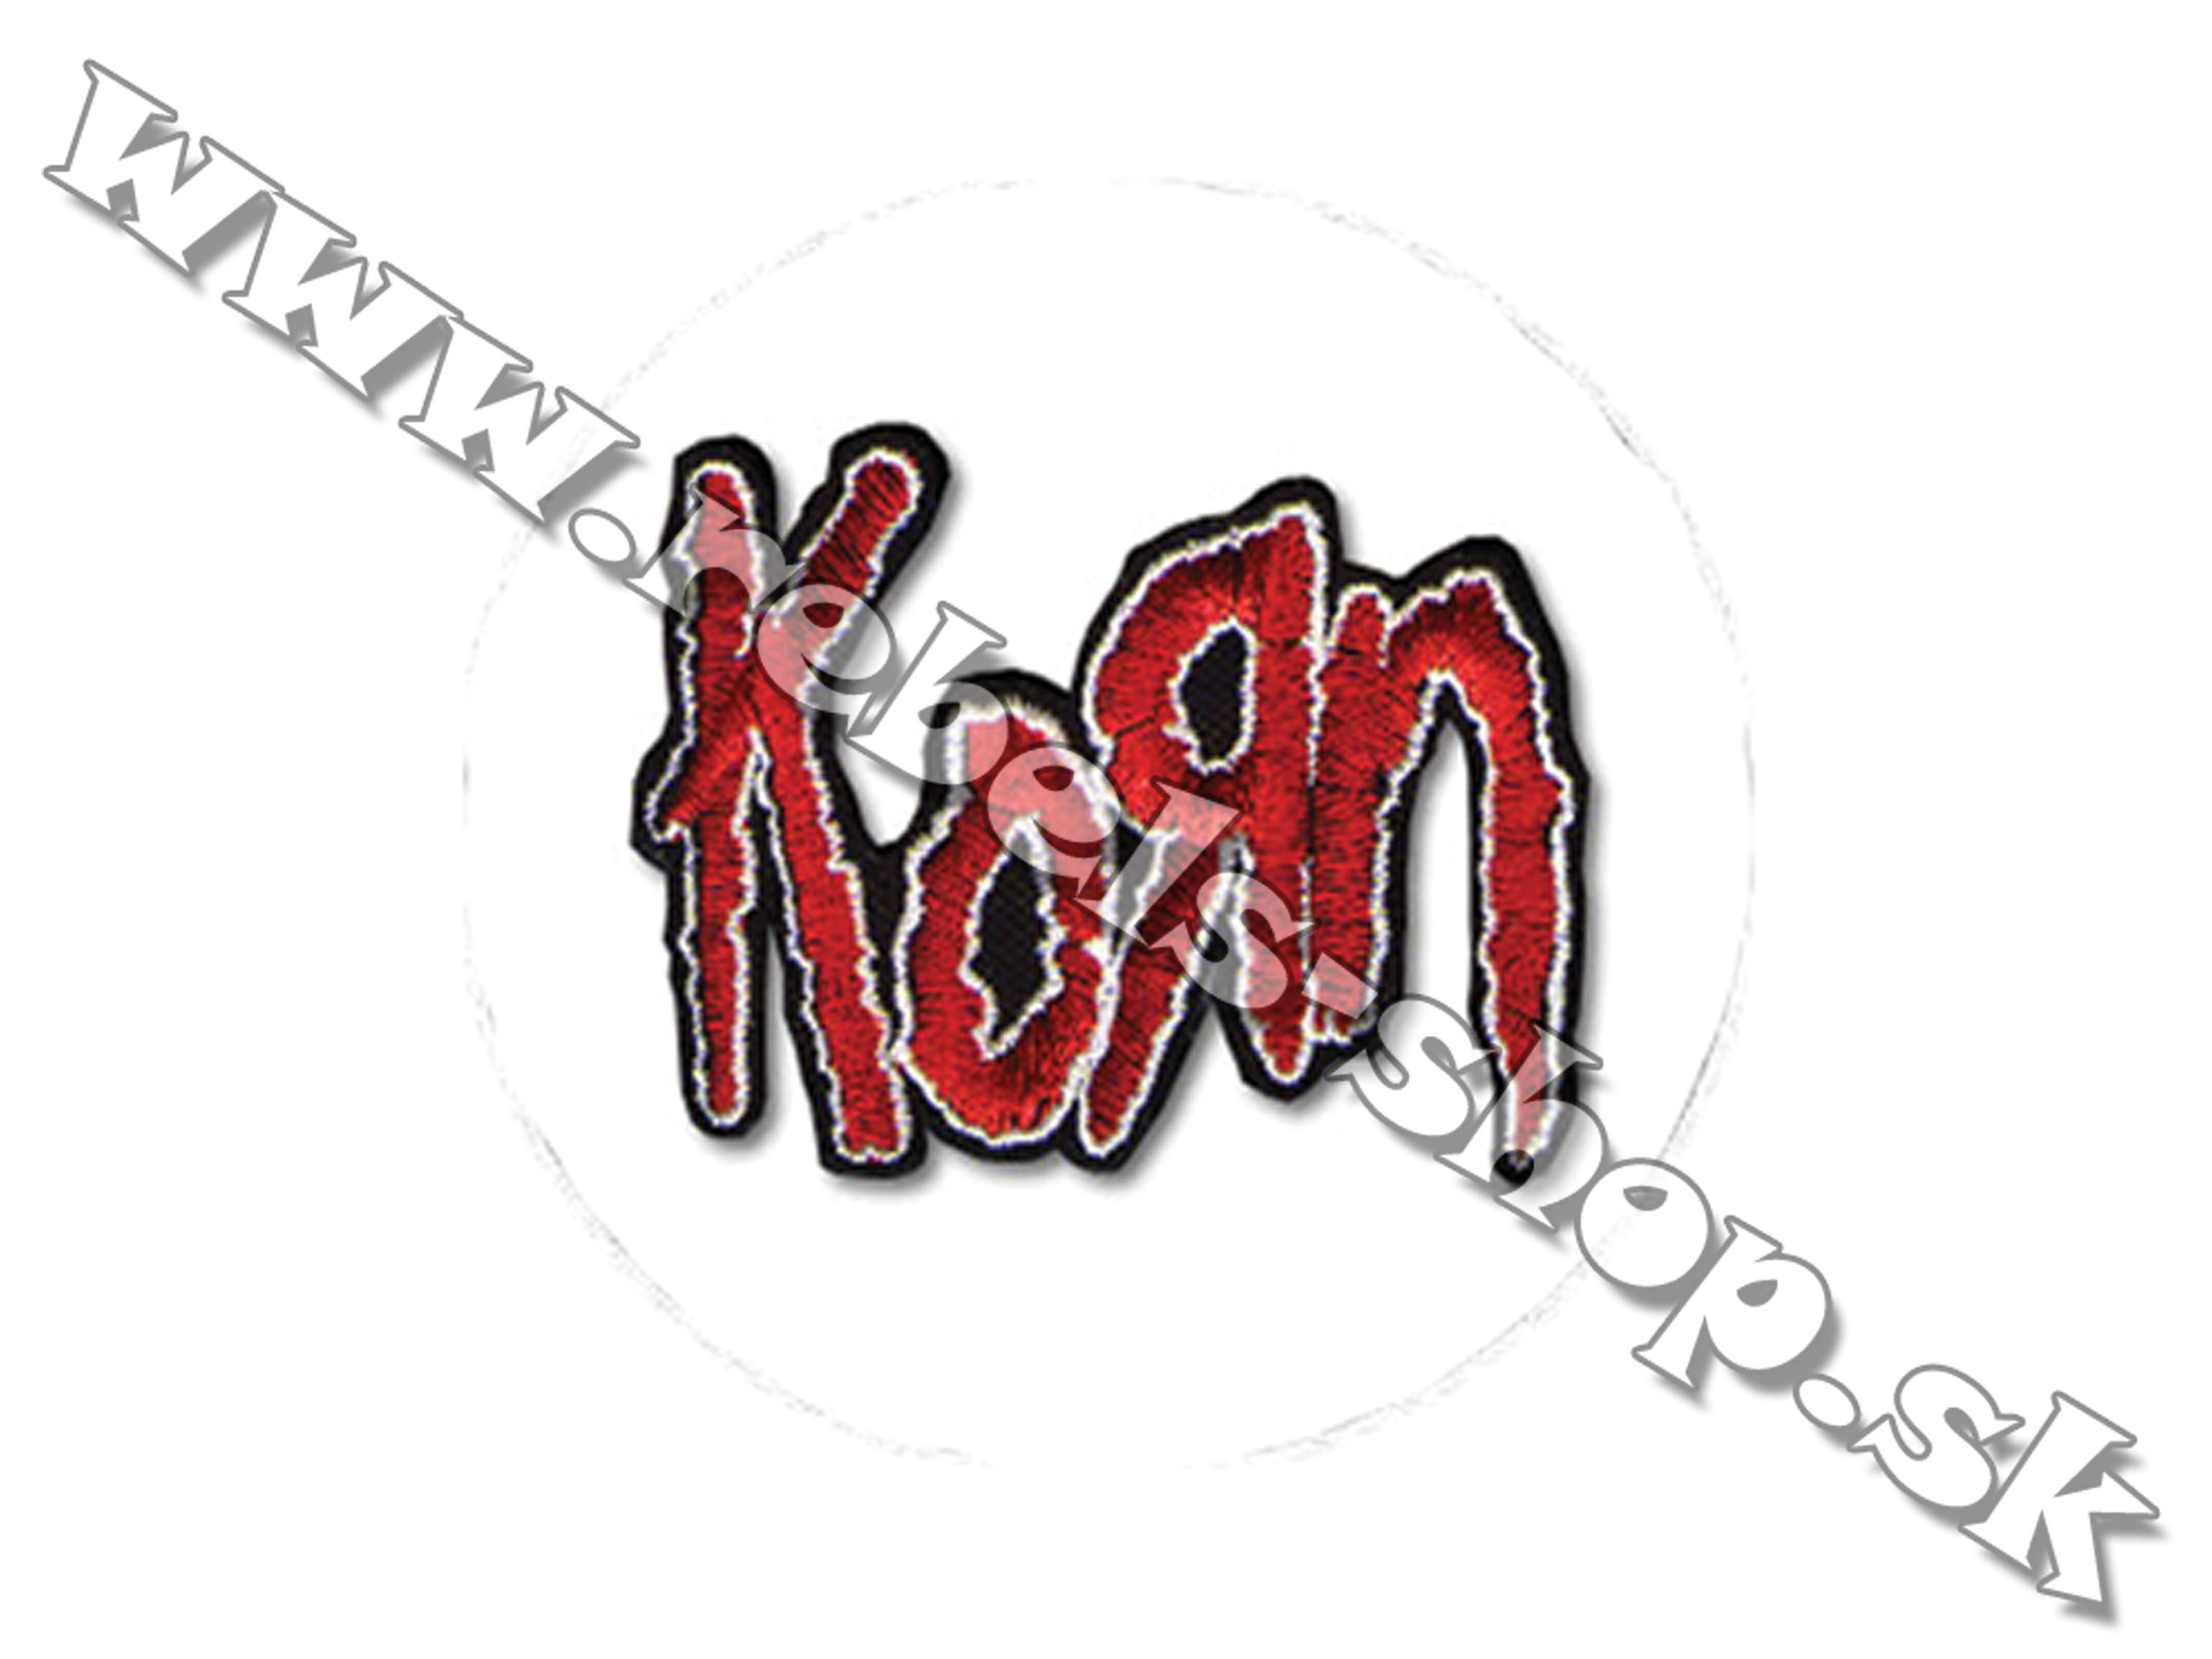 Odznak "Korn"